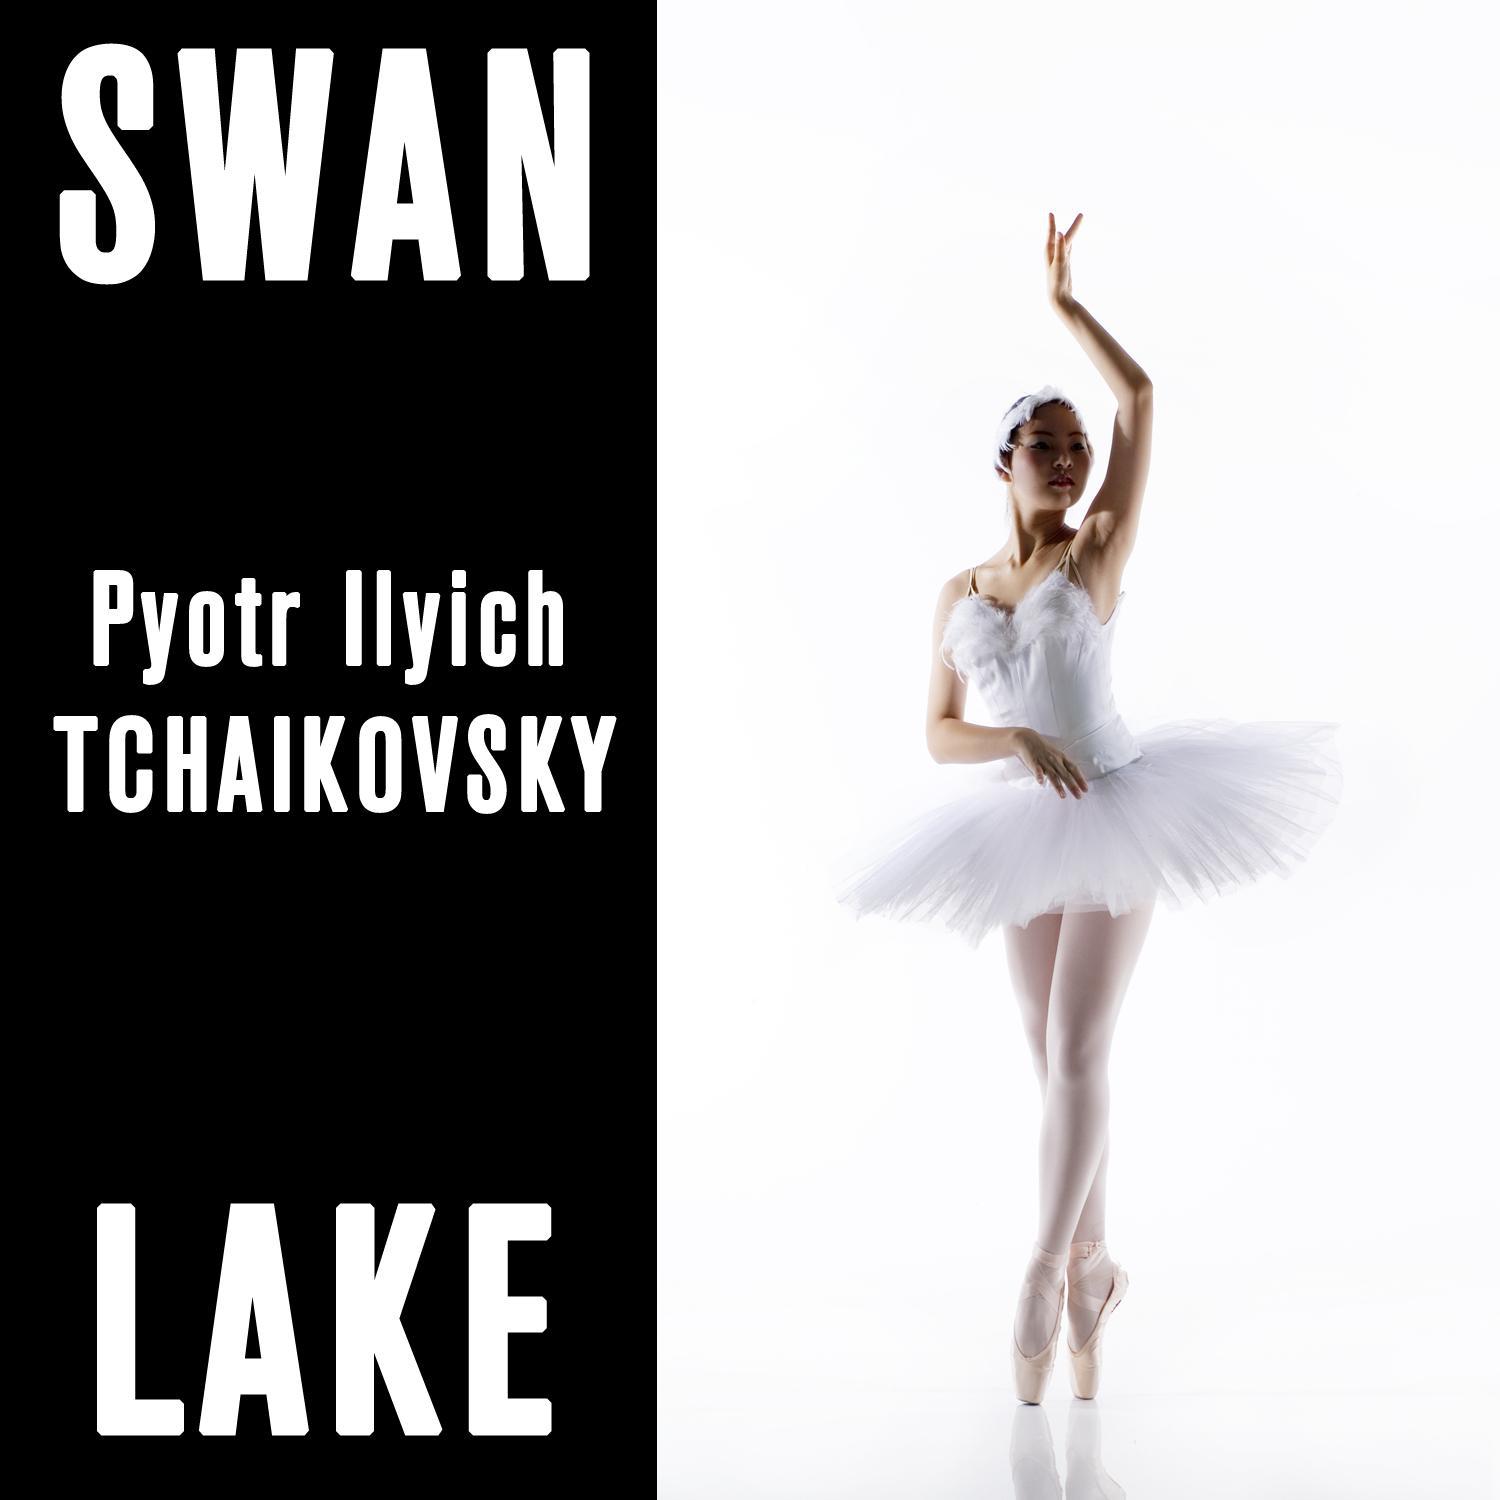 Swan Lake, Op. 20: No. 17, Entree des invites et valse. Allegro - Tempo di valse